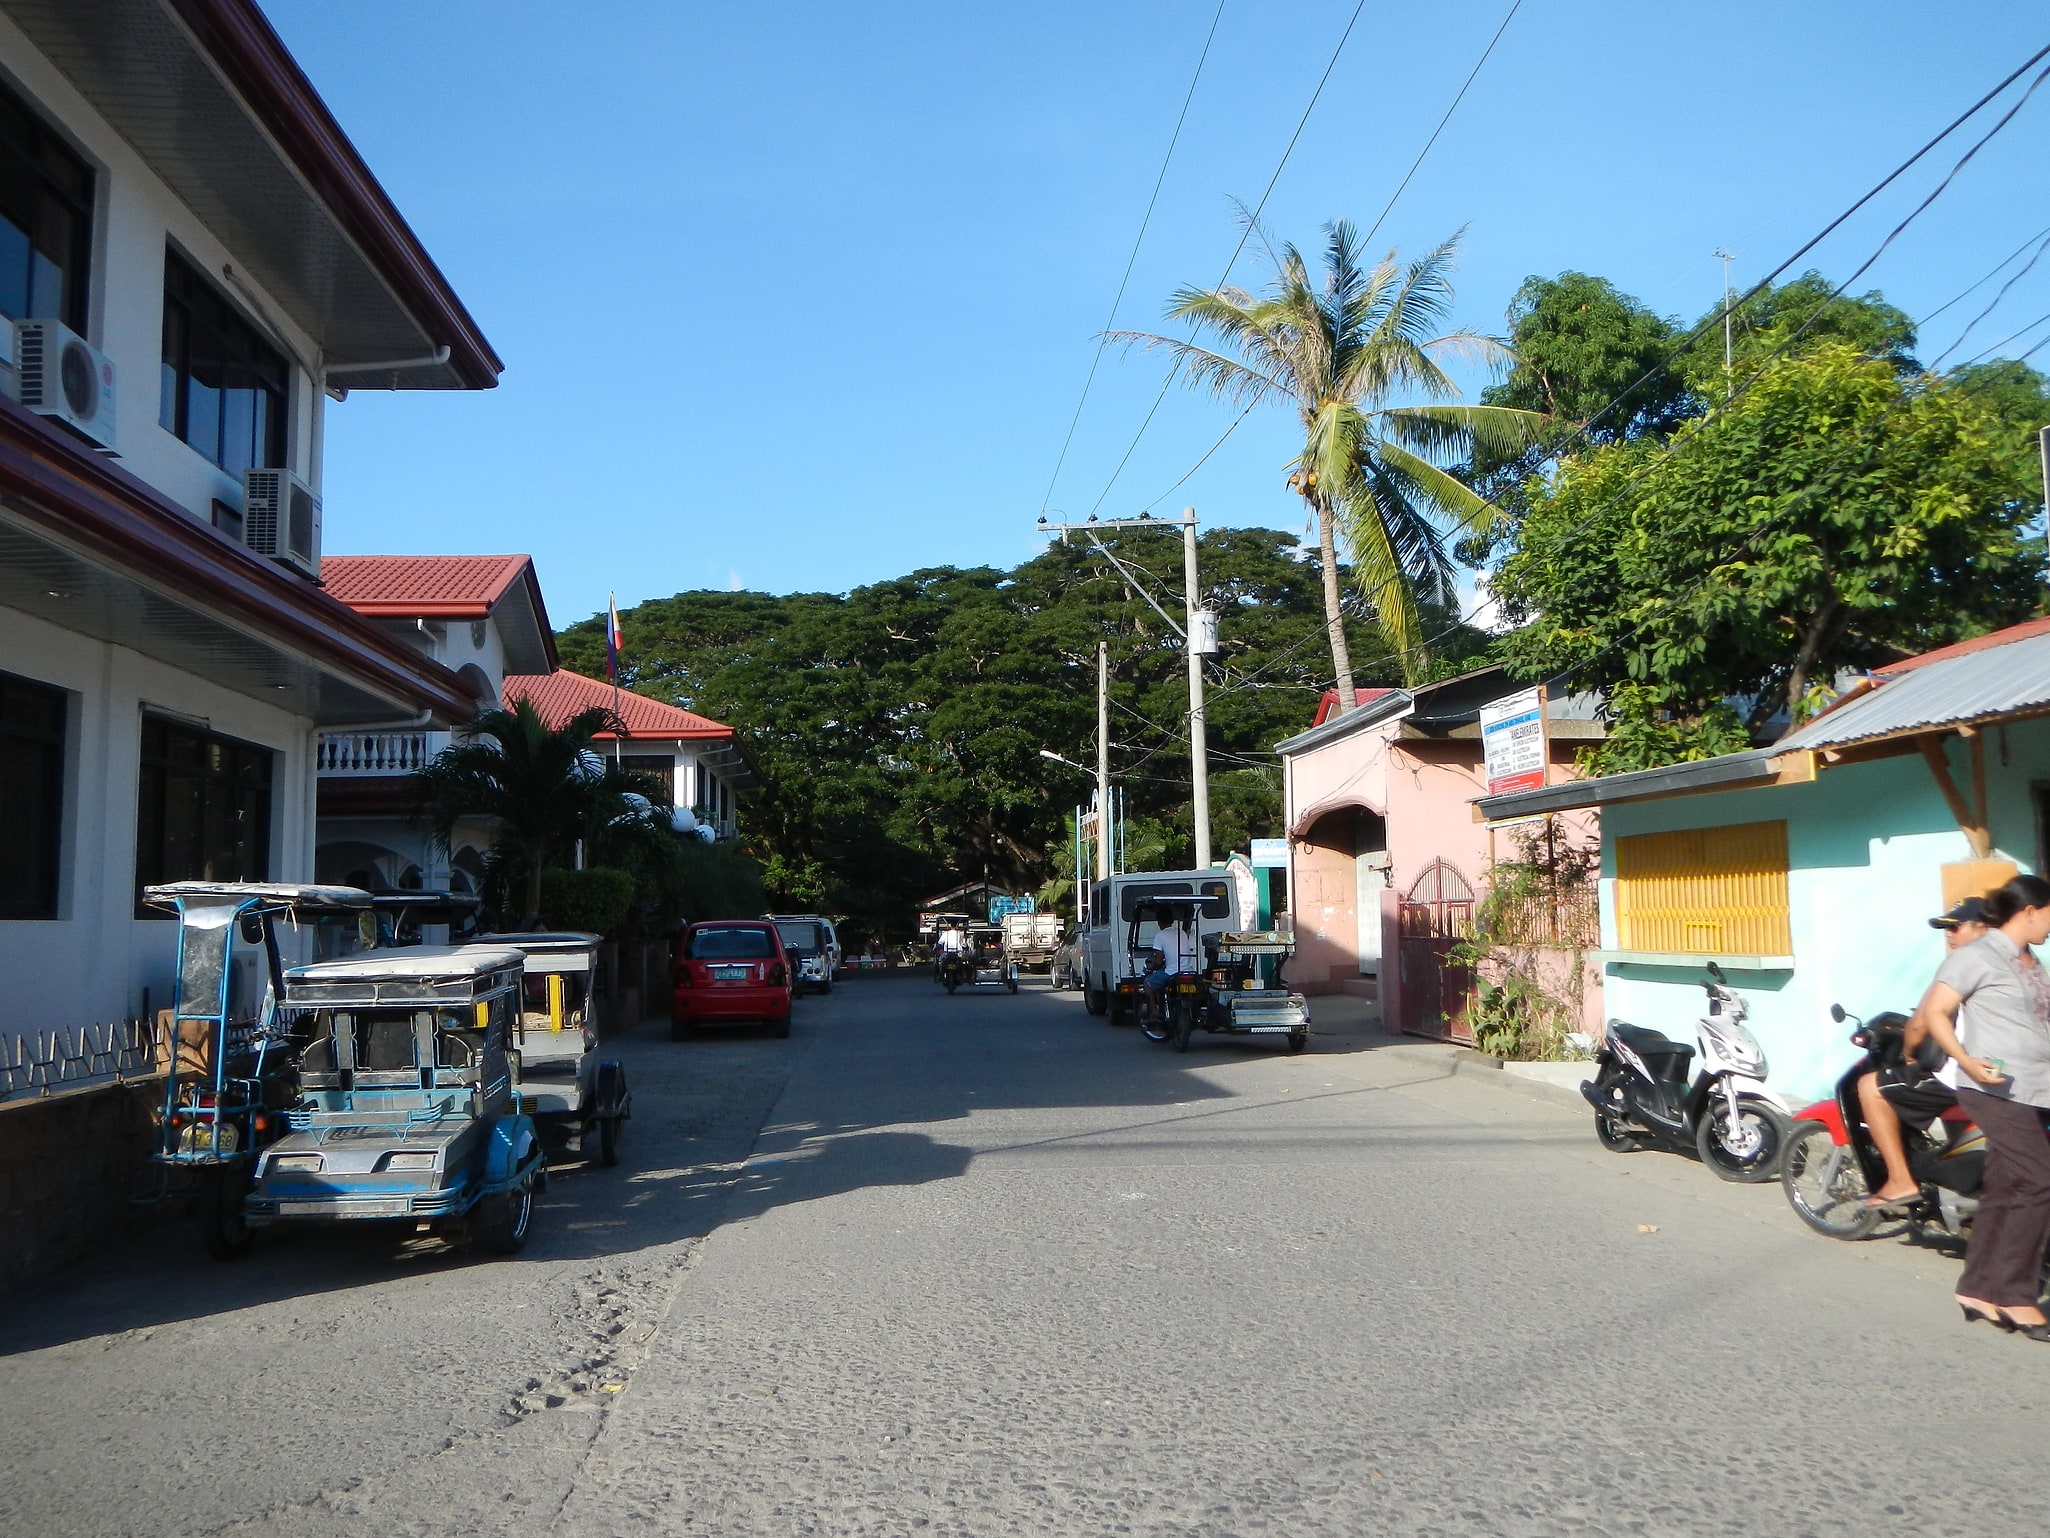 Calatagan, Philippines